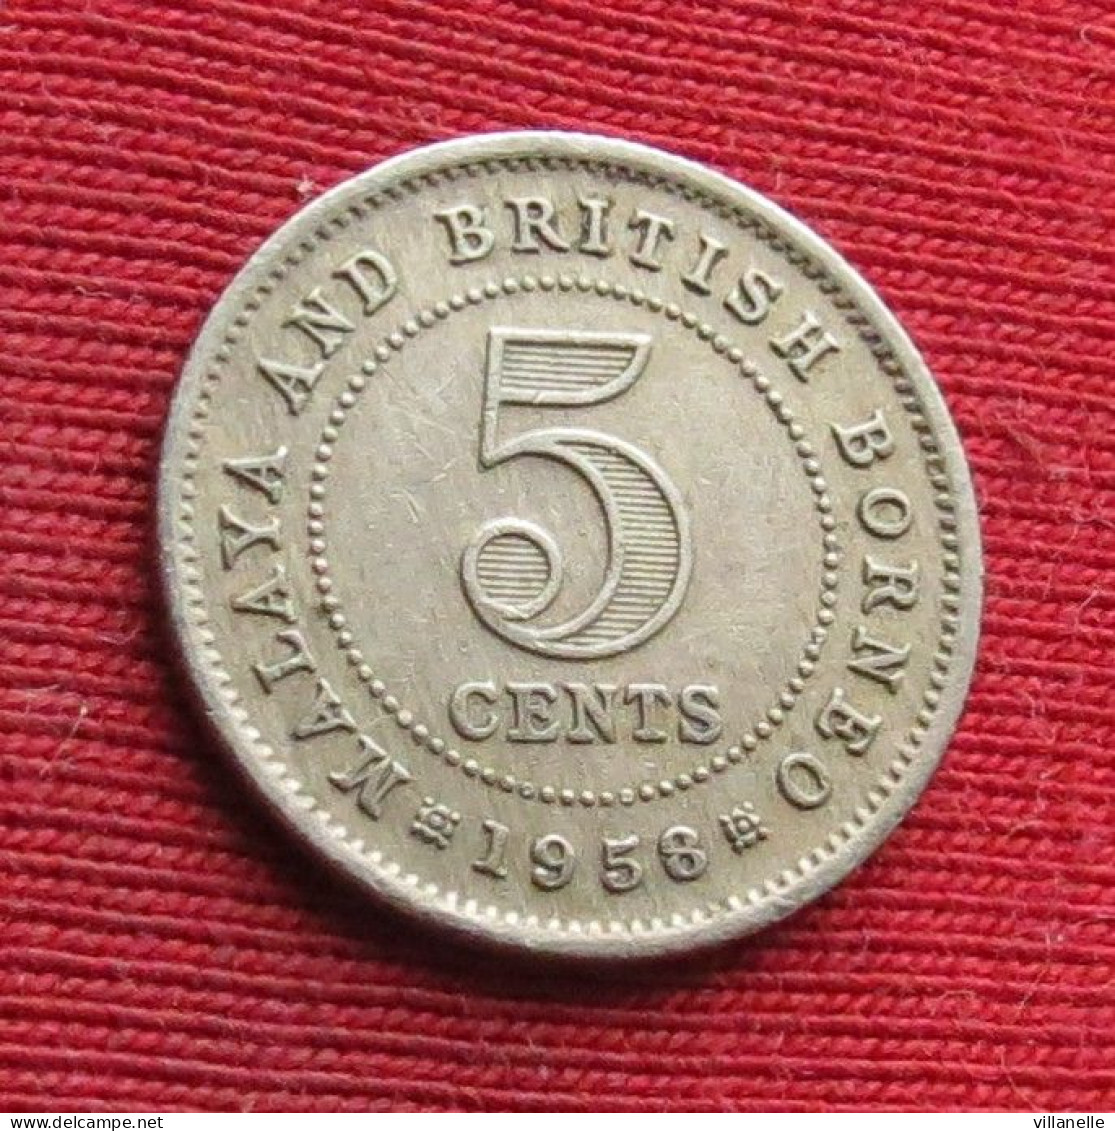 Malaya And British Borneo 5 Cents 1958 #2 W ºº - Malaysia